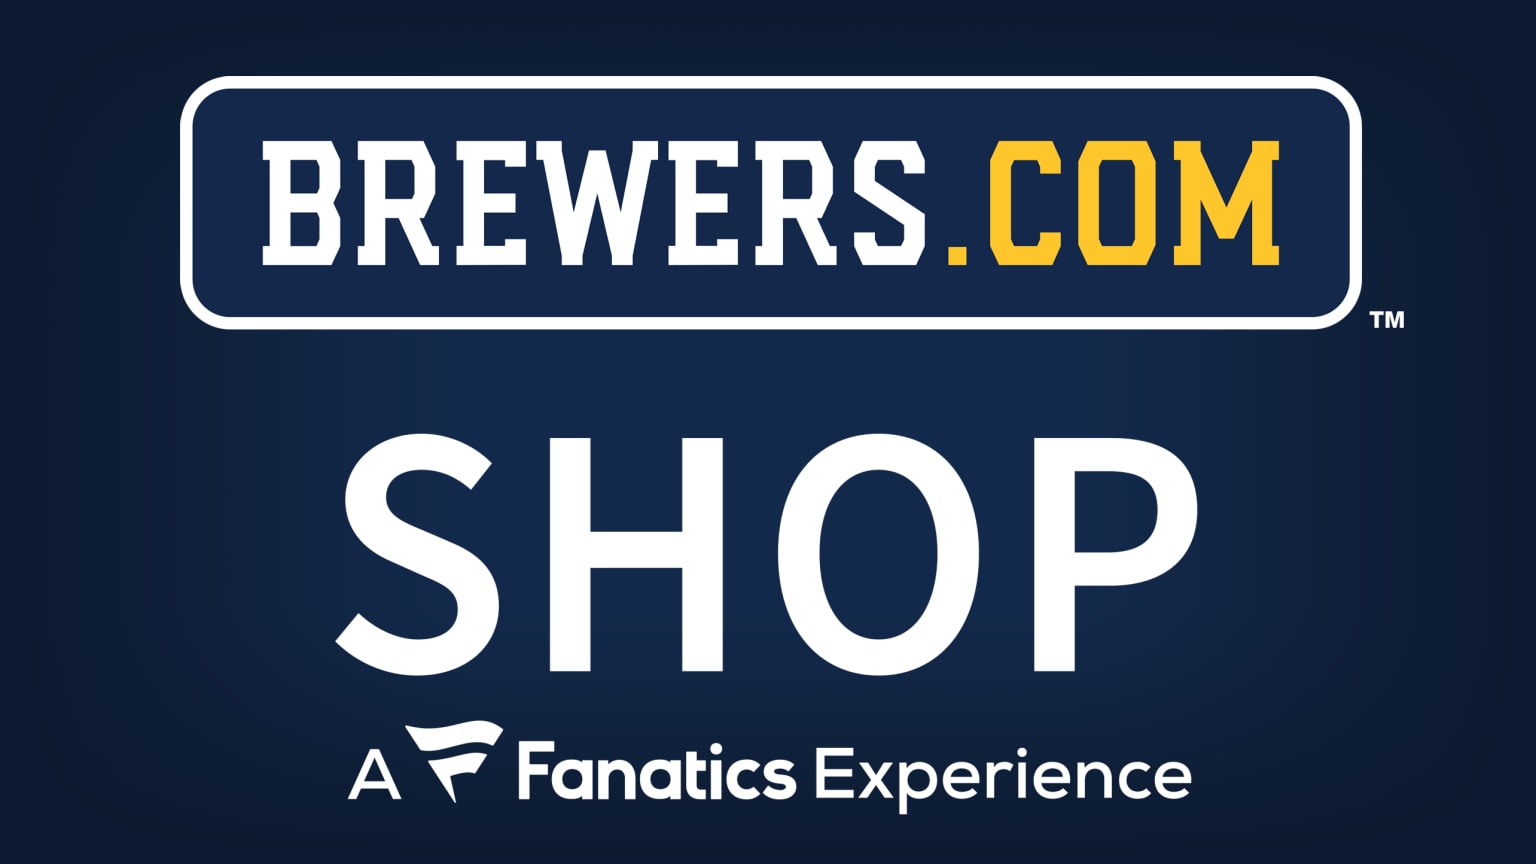 Milwaukee Brewers Gear, Brewers Merchandise, Brewers Apparel, Store